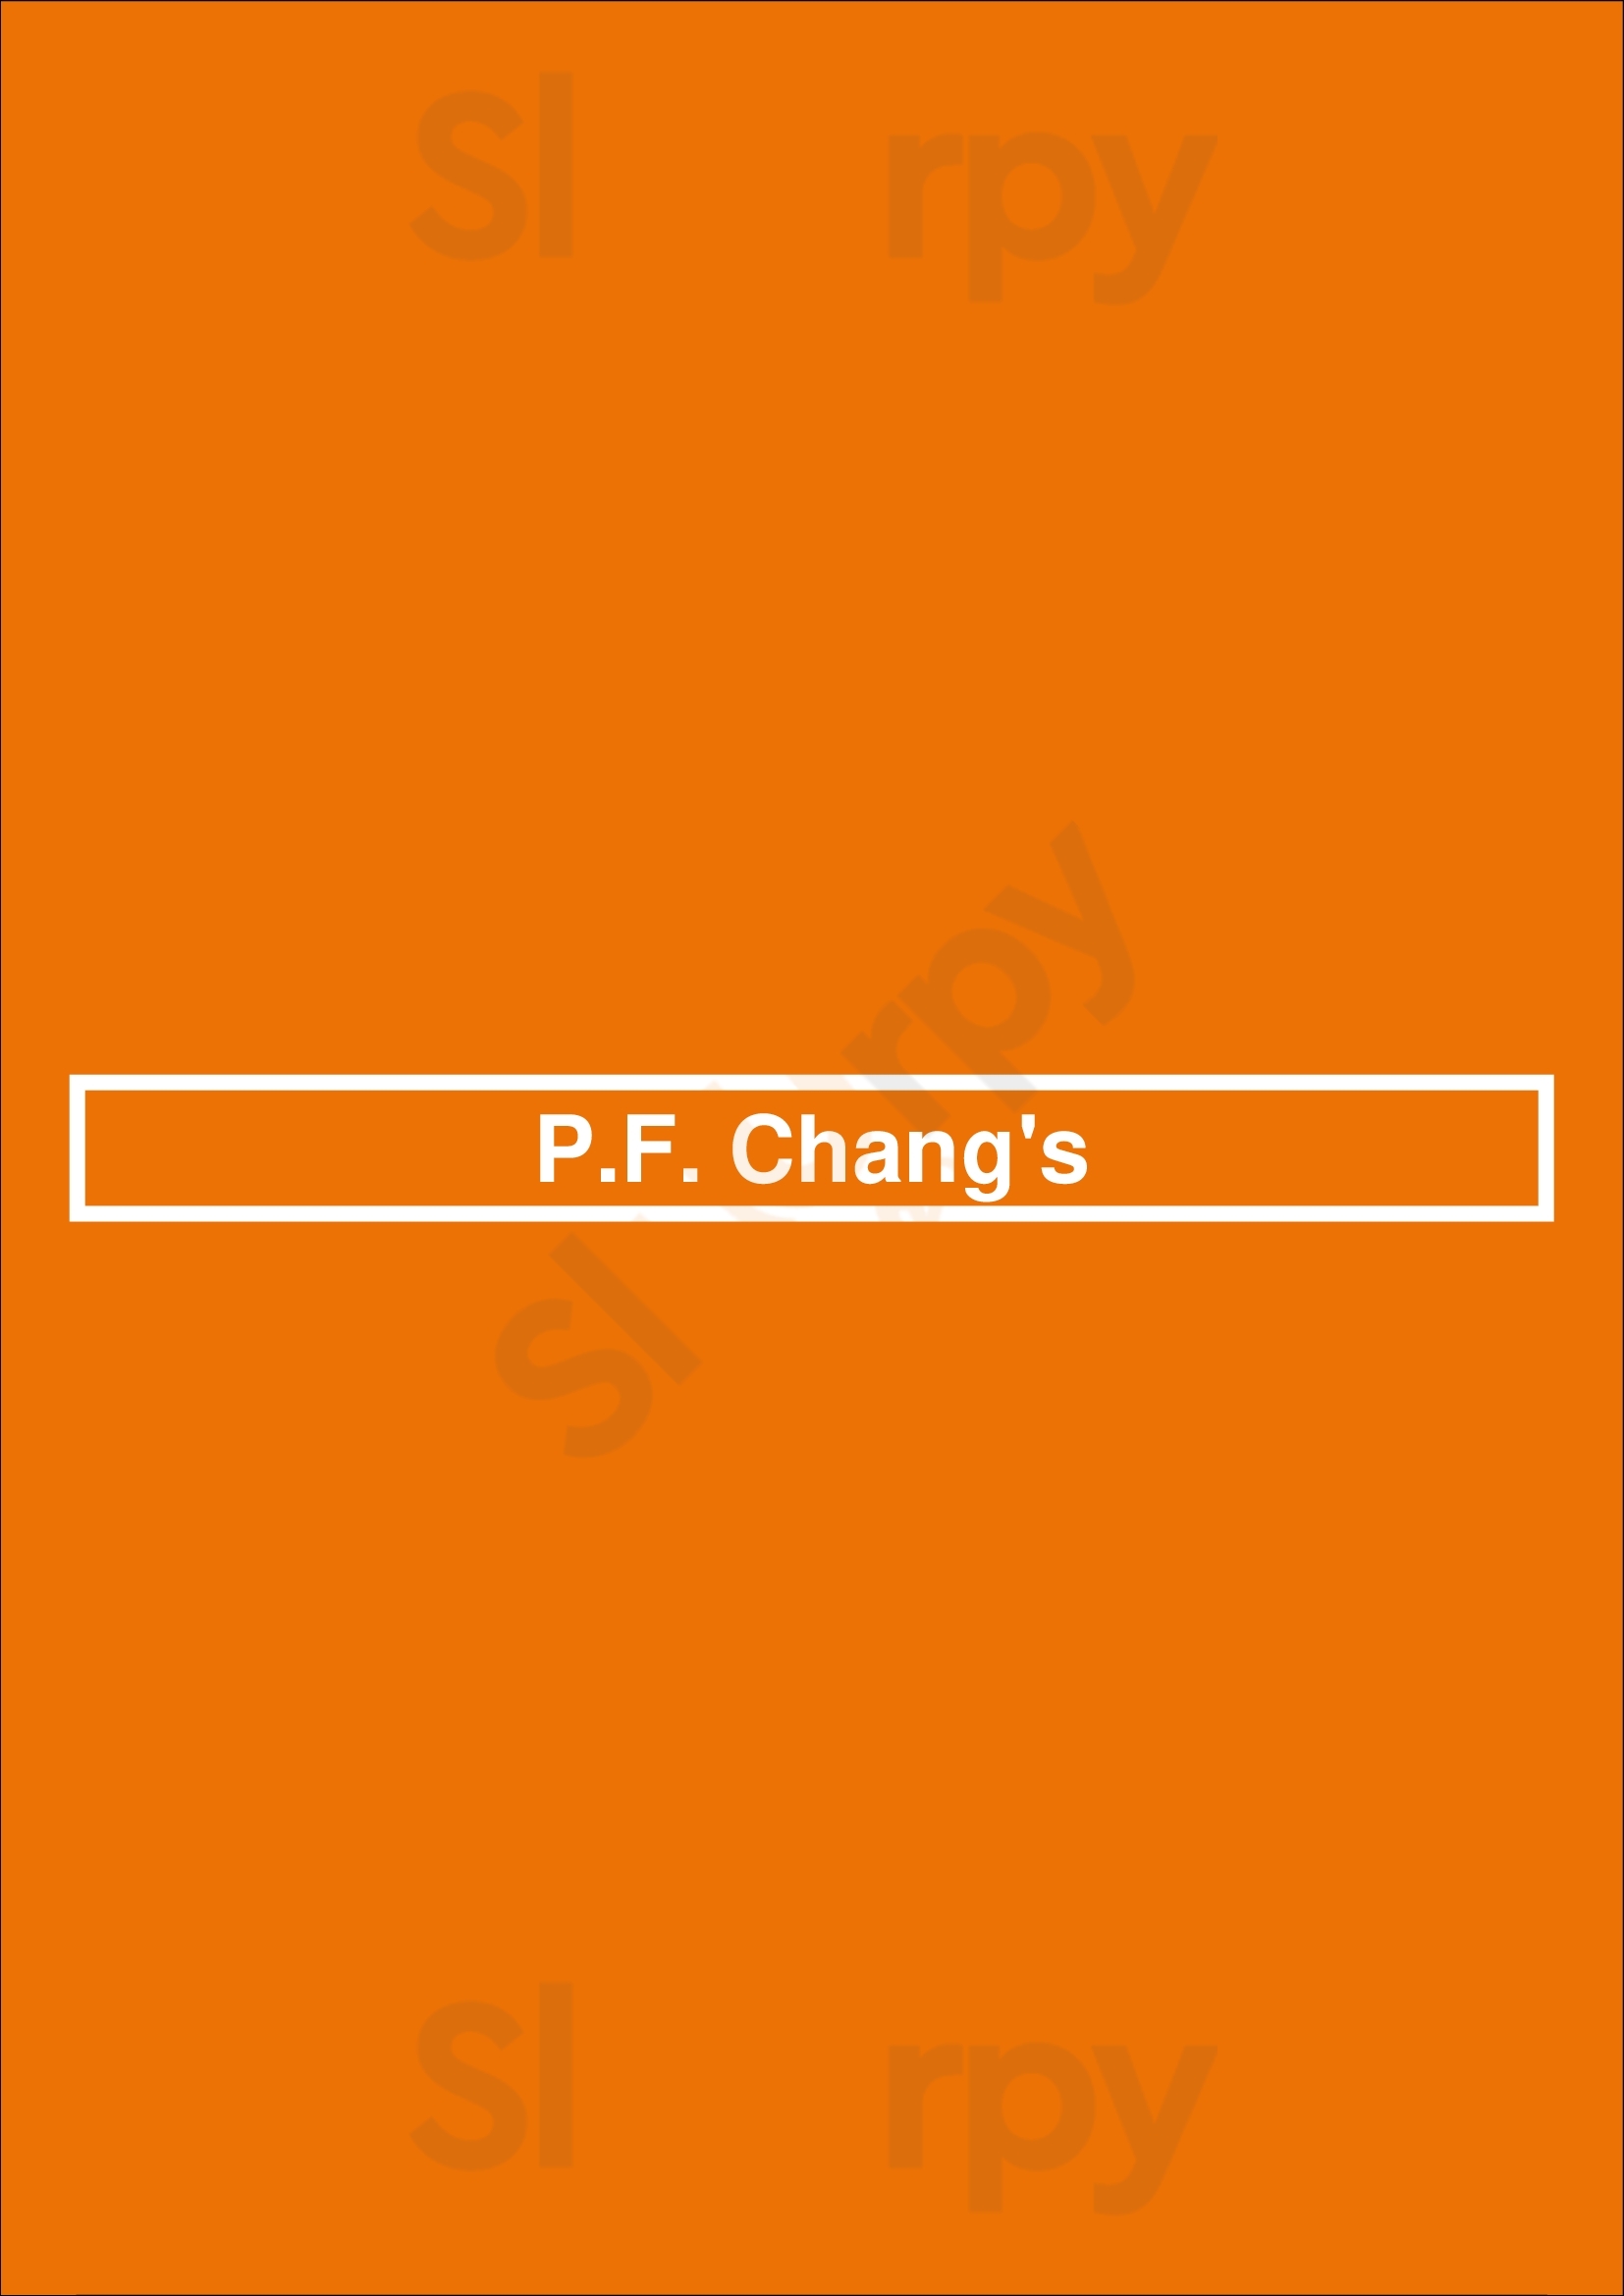 P.f. Chang's Newport Beach Menu - 1